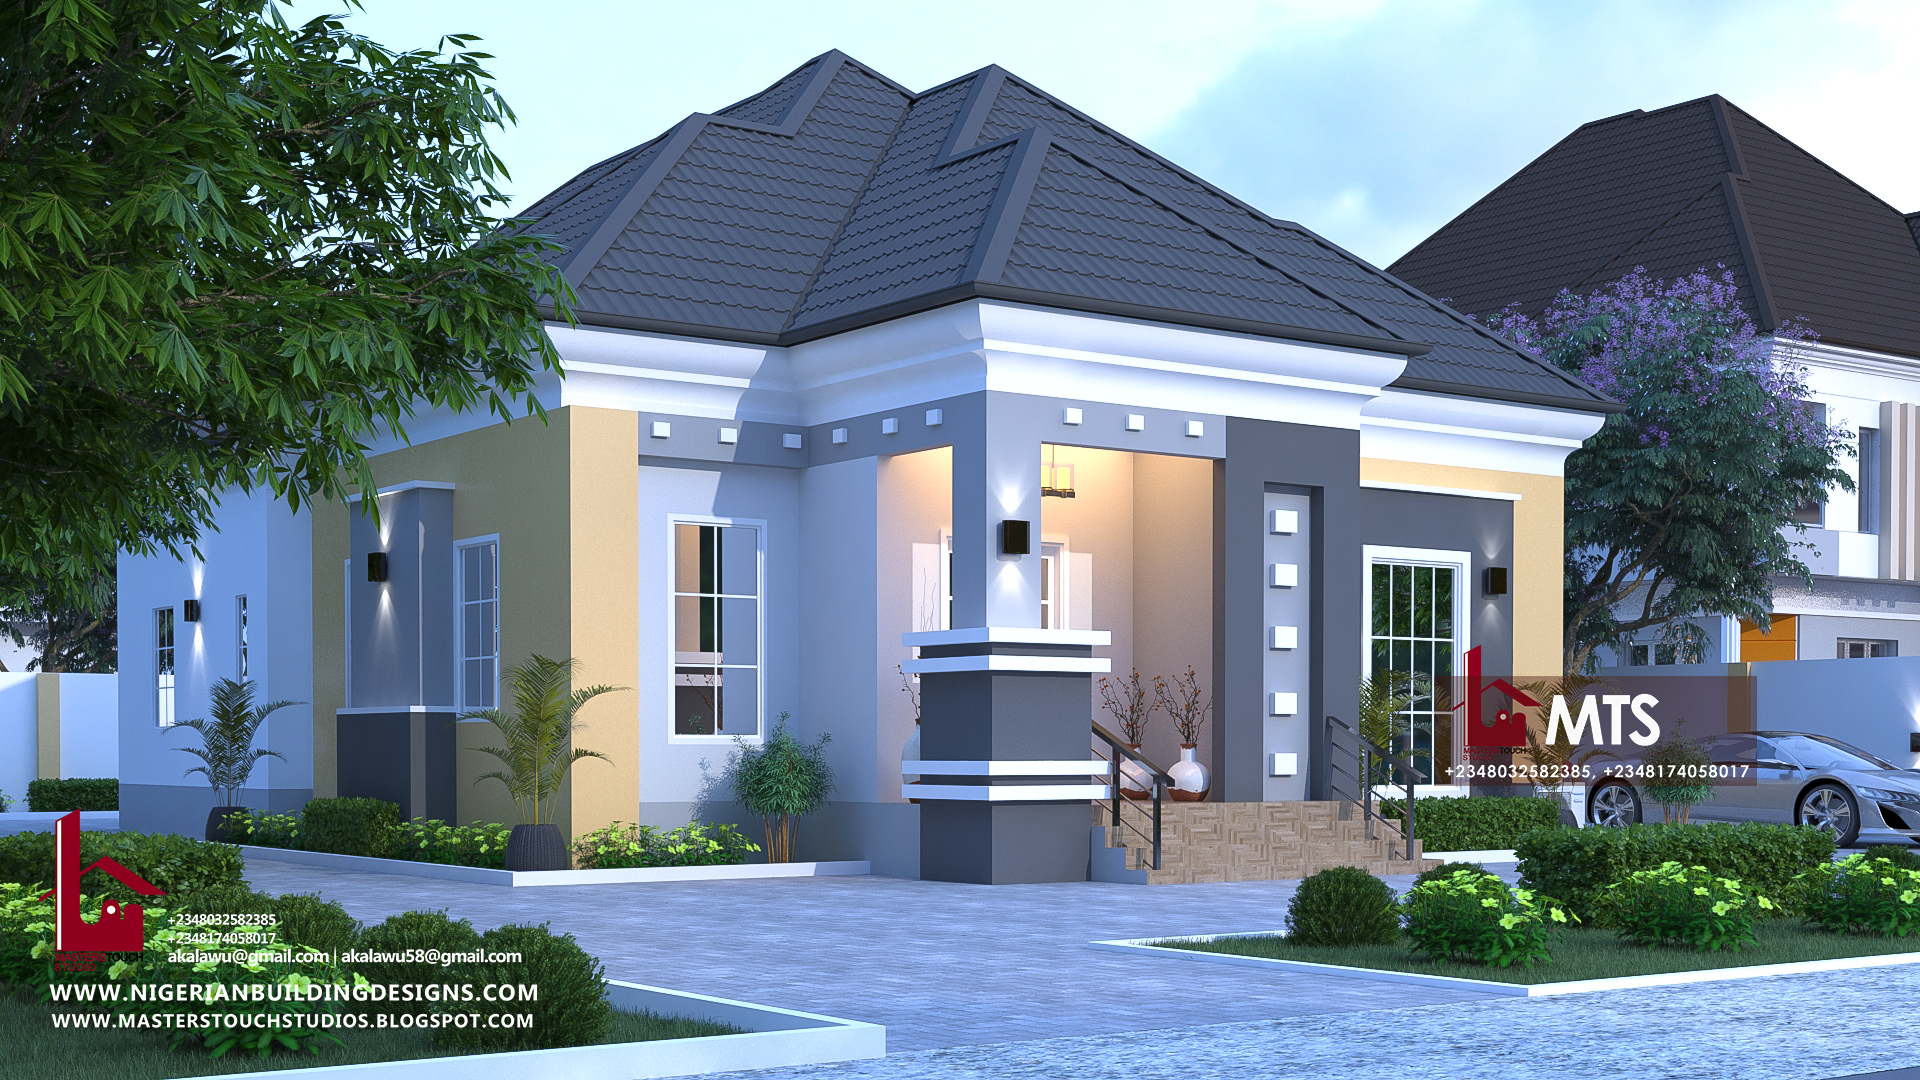 Three Bedroom Flat Building Plan In Nigeria | www.resnooze.com